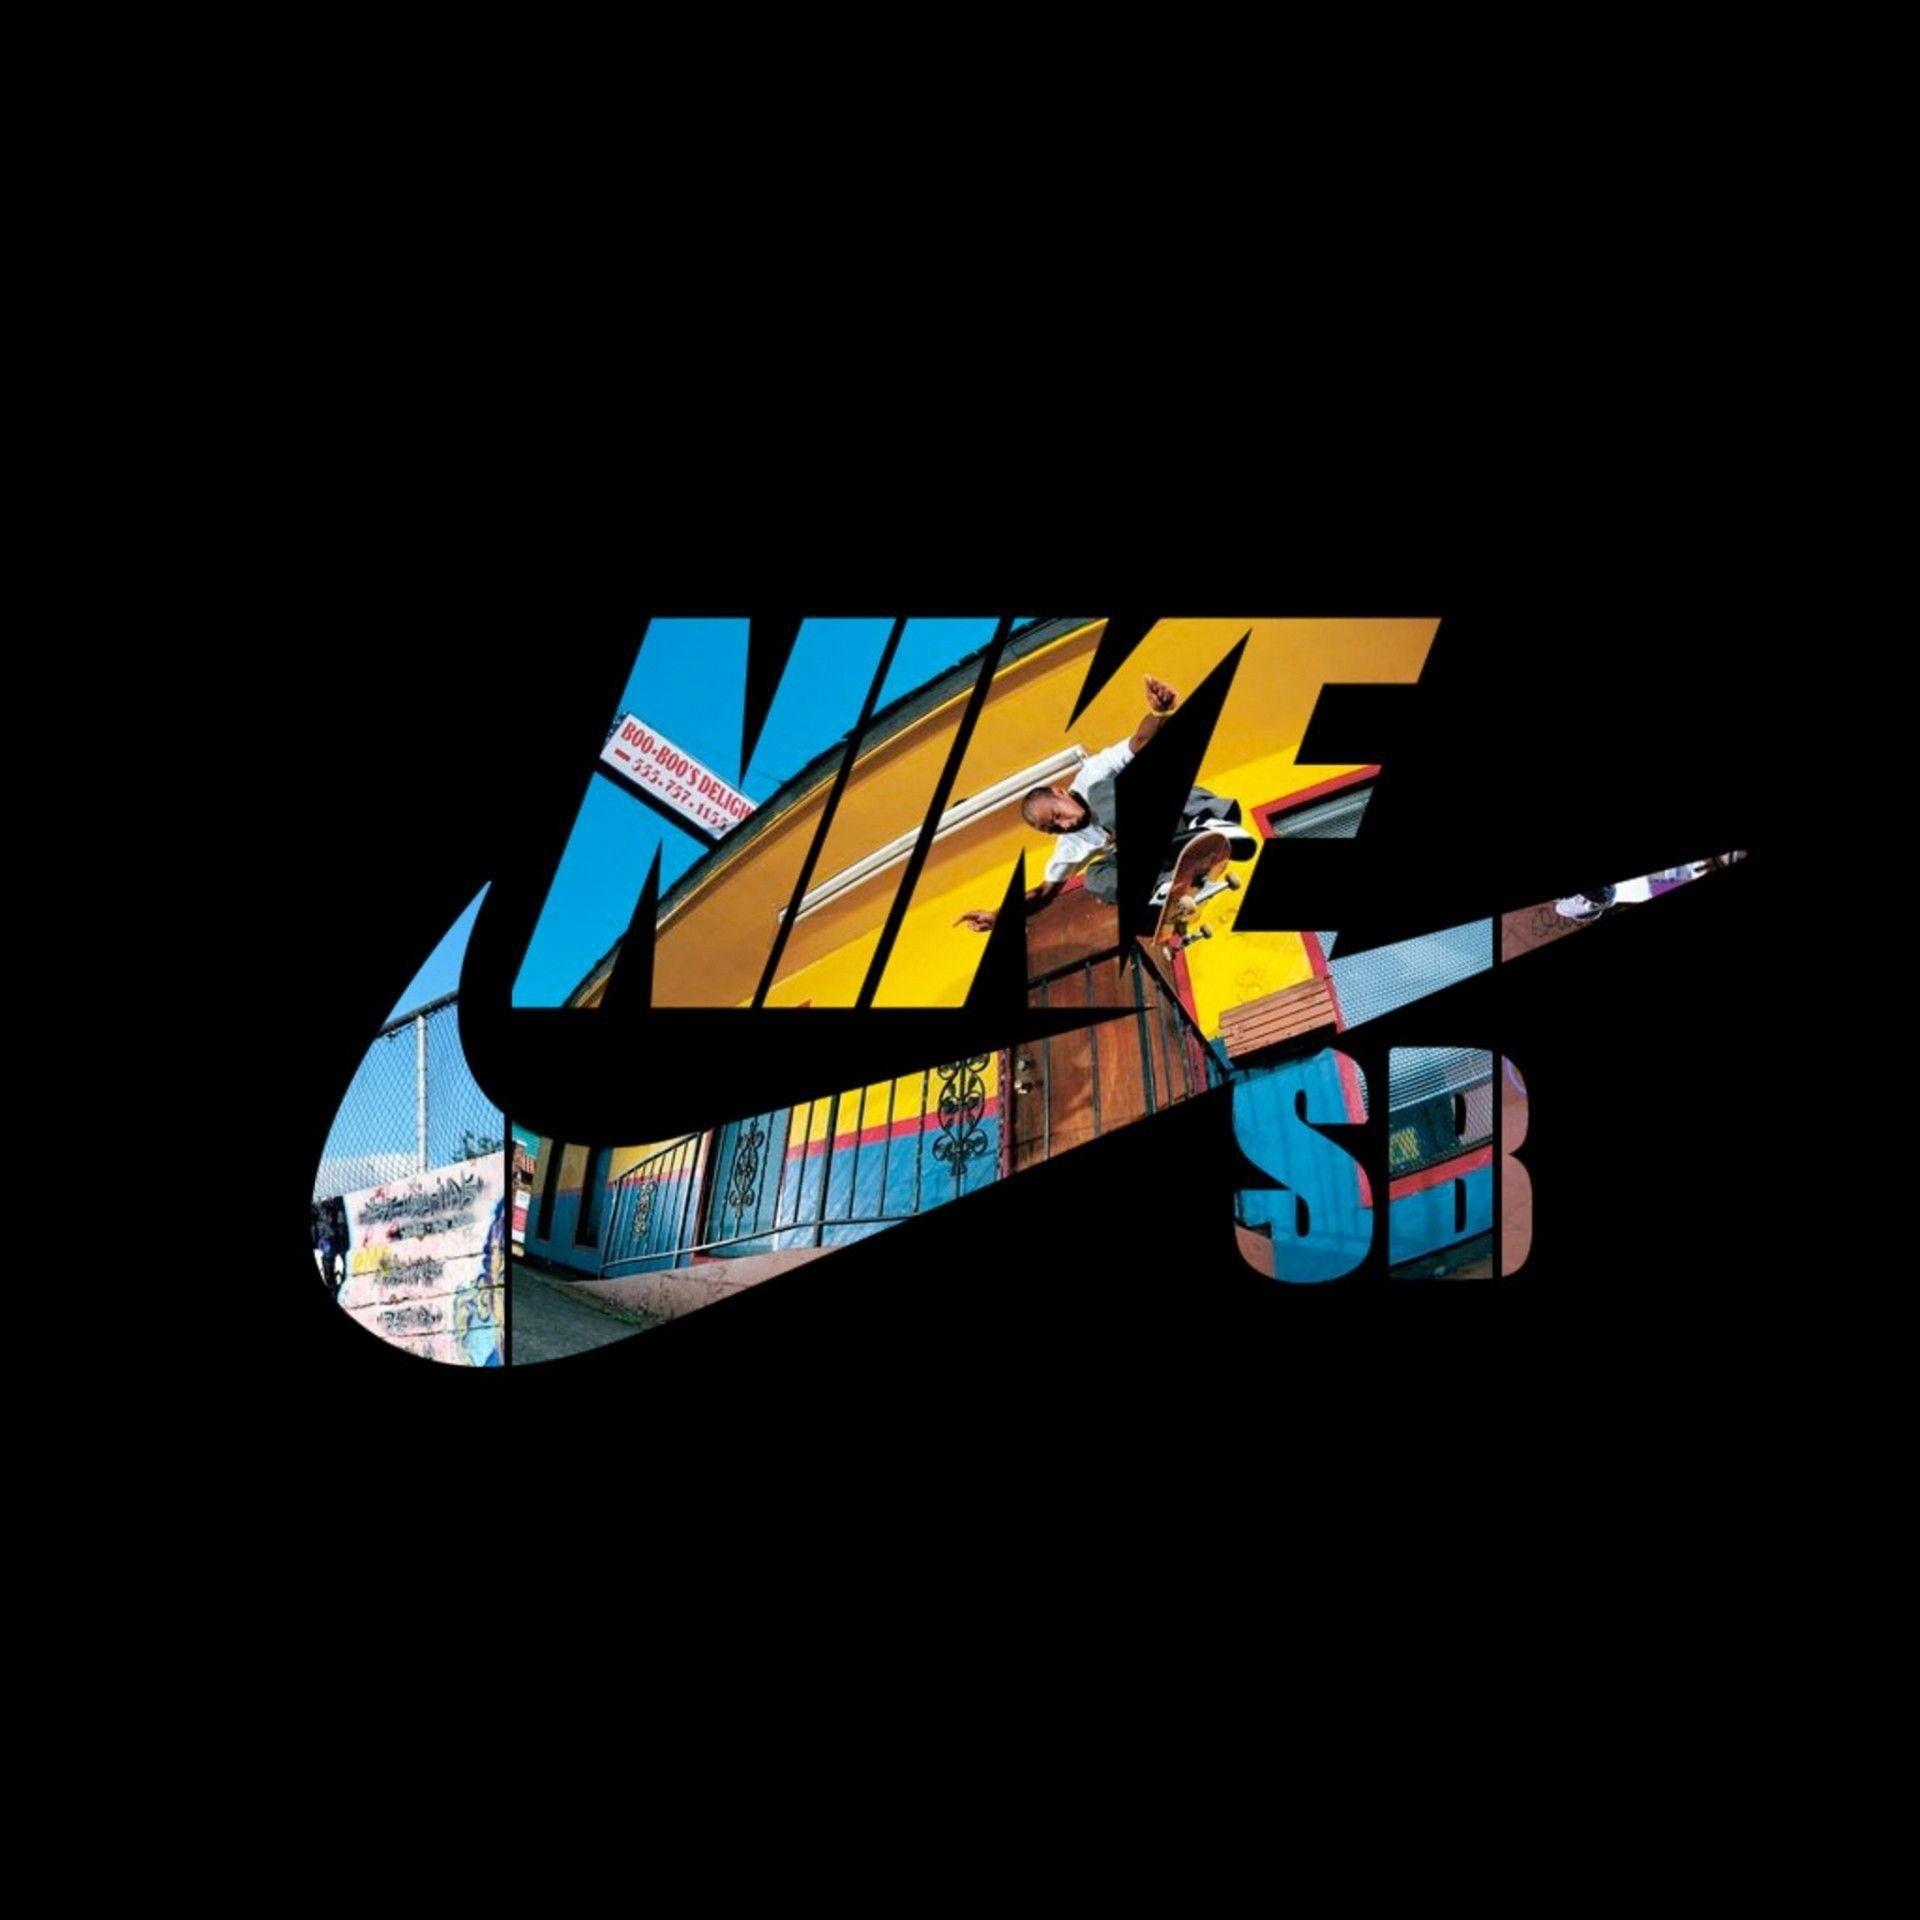 Nike And Adidas Wallpapers